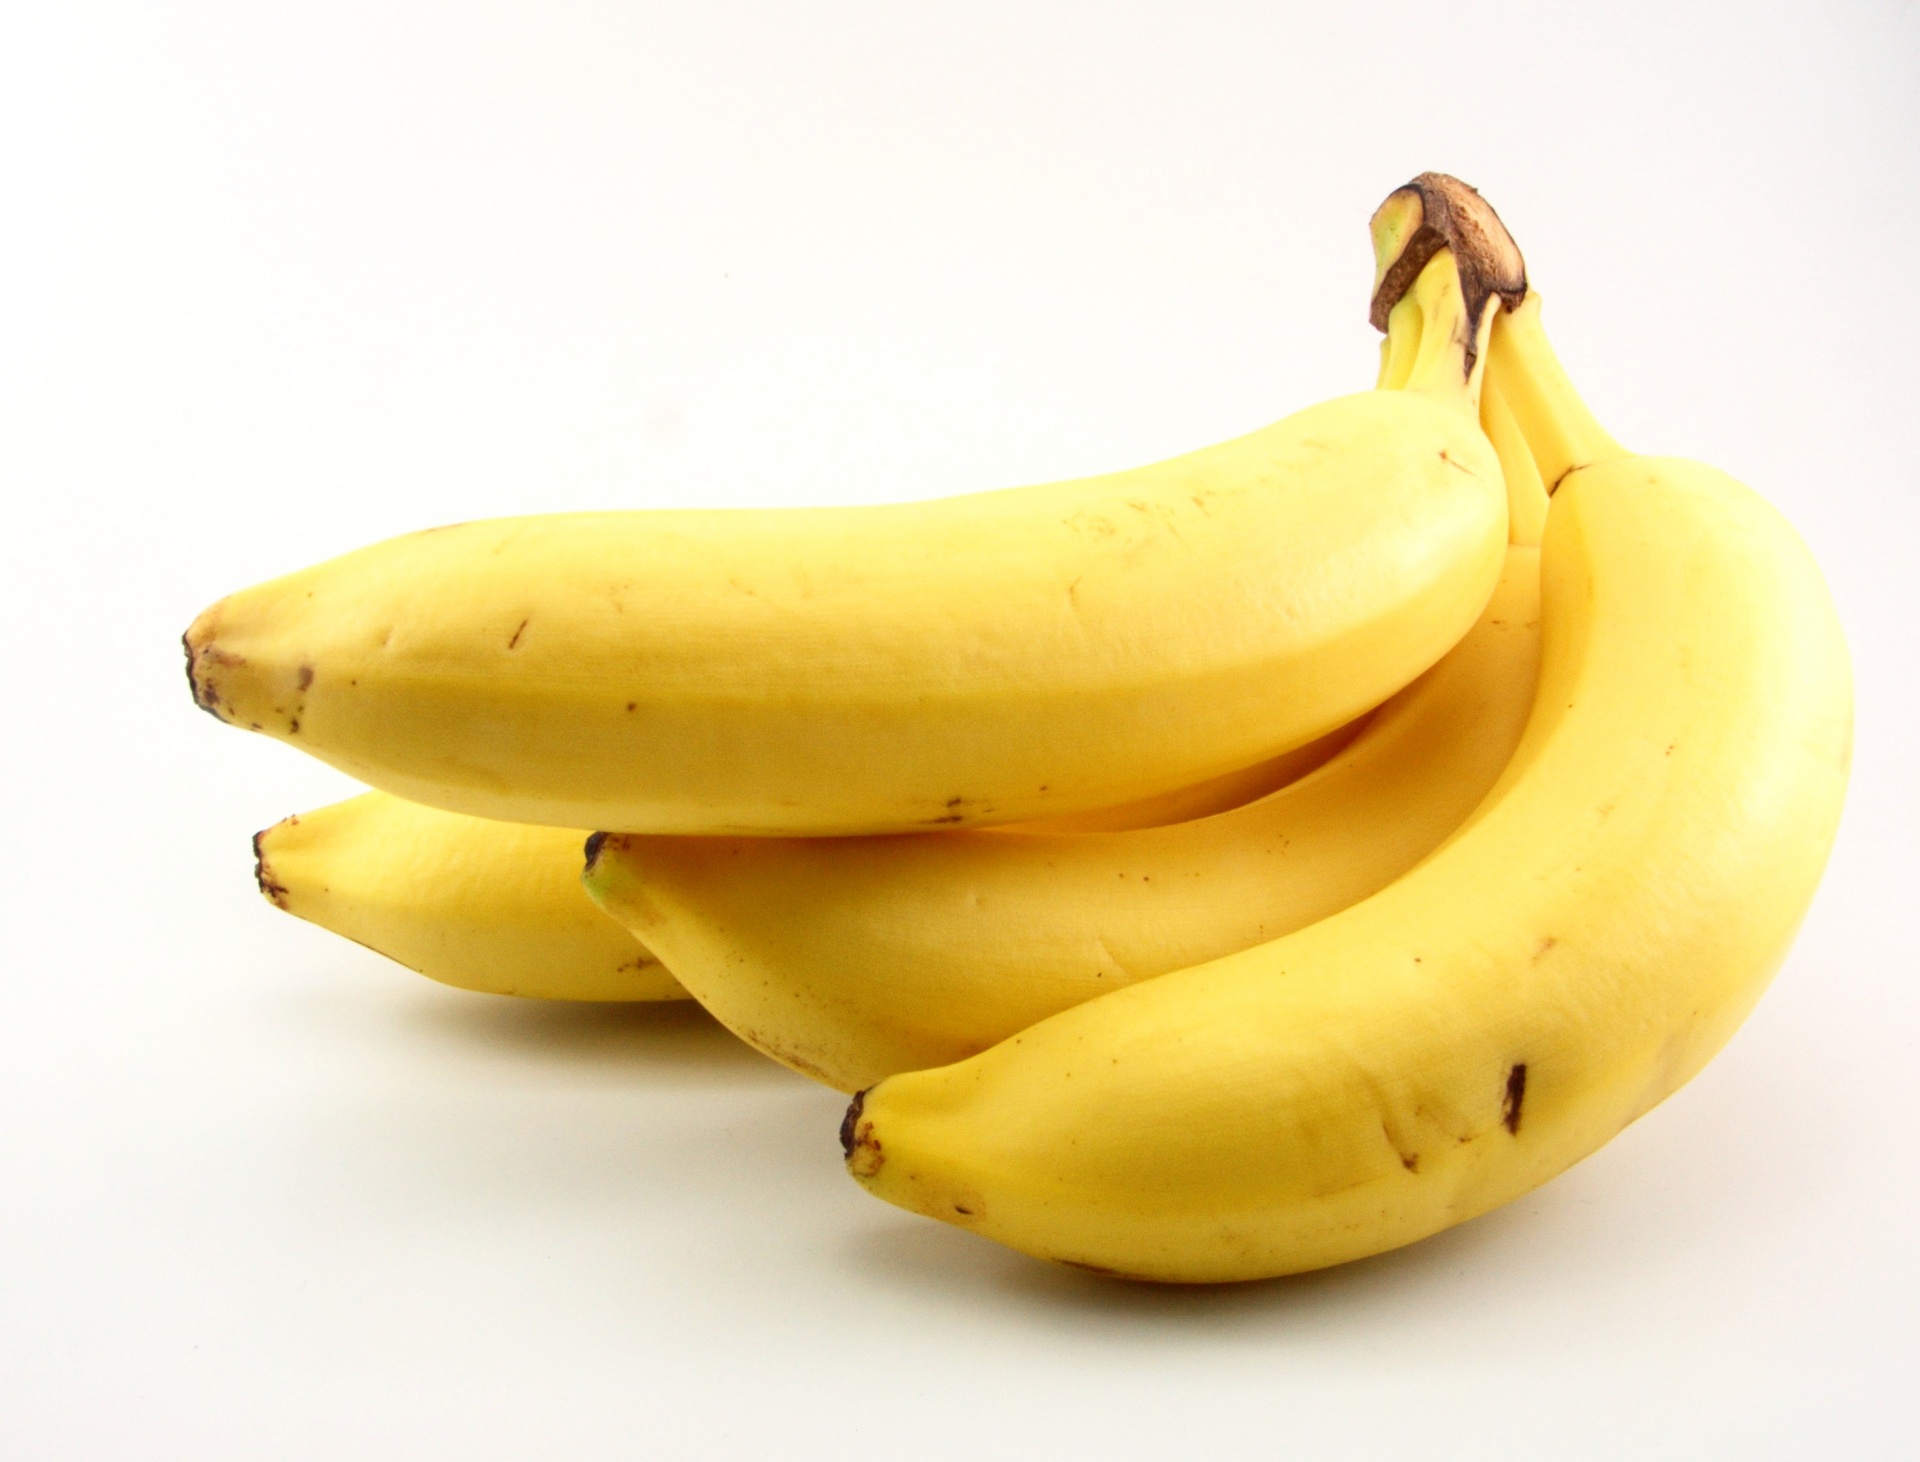 Bananas Isolated On White